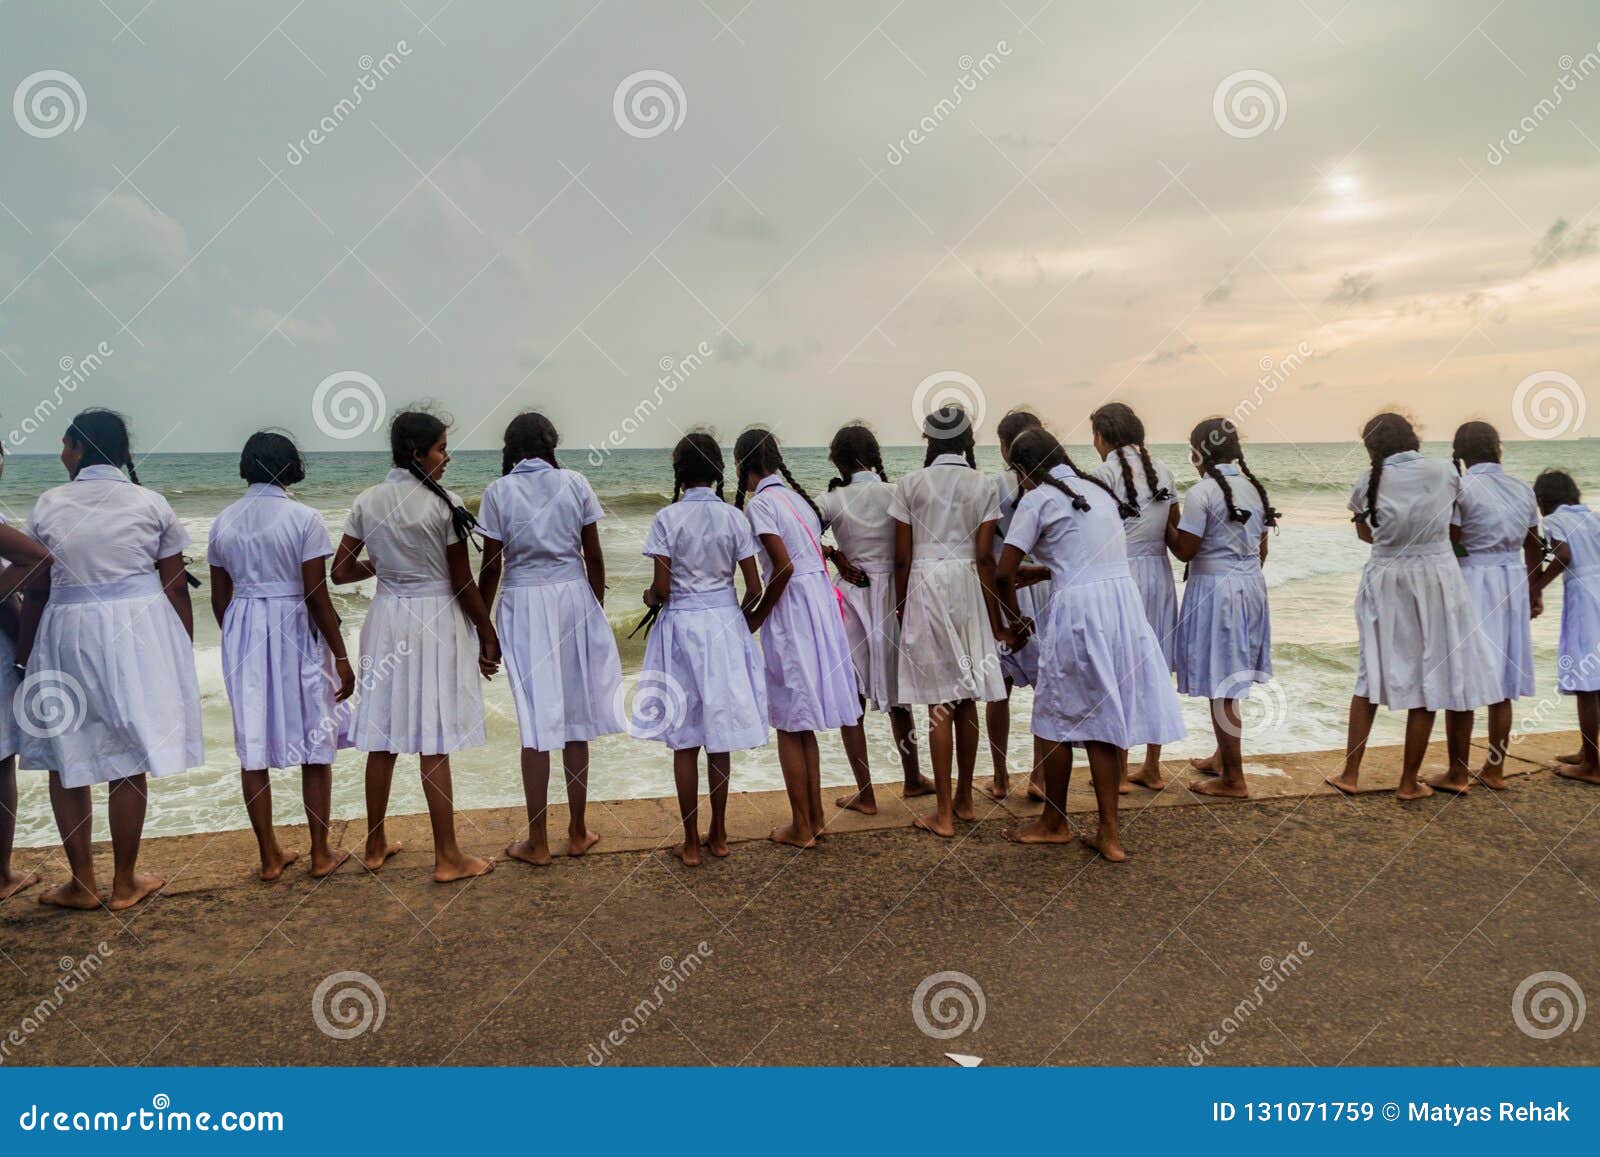 Lanka girls sri colombo Sri Lanka